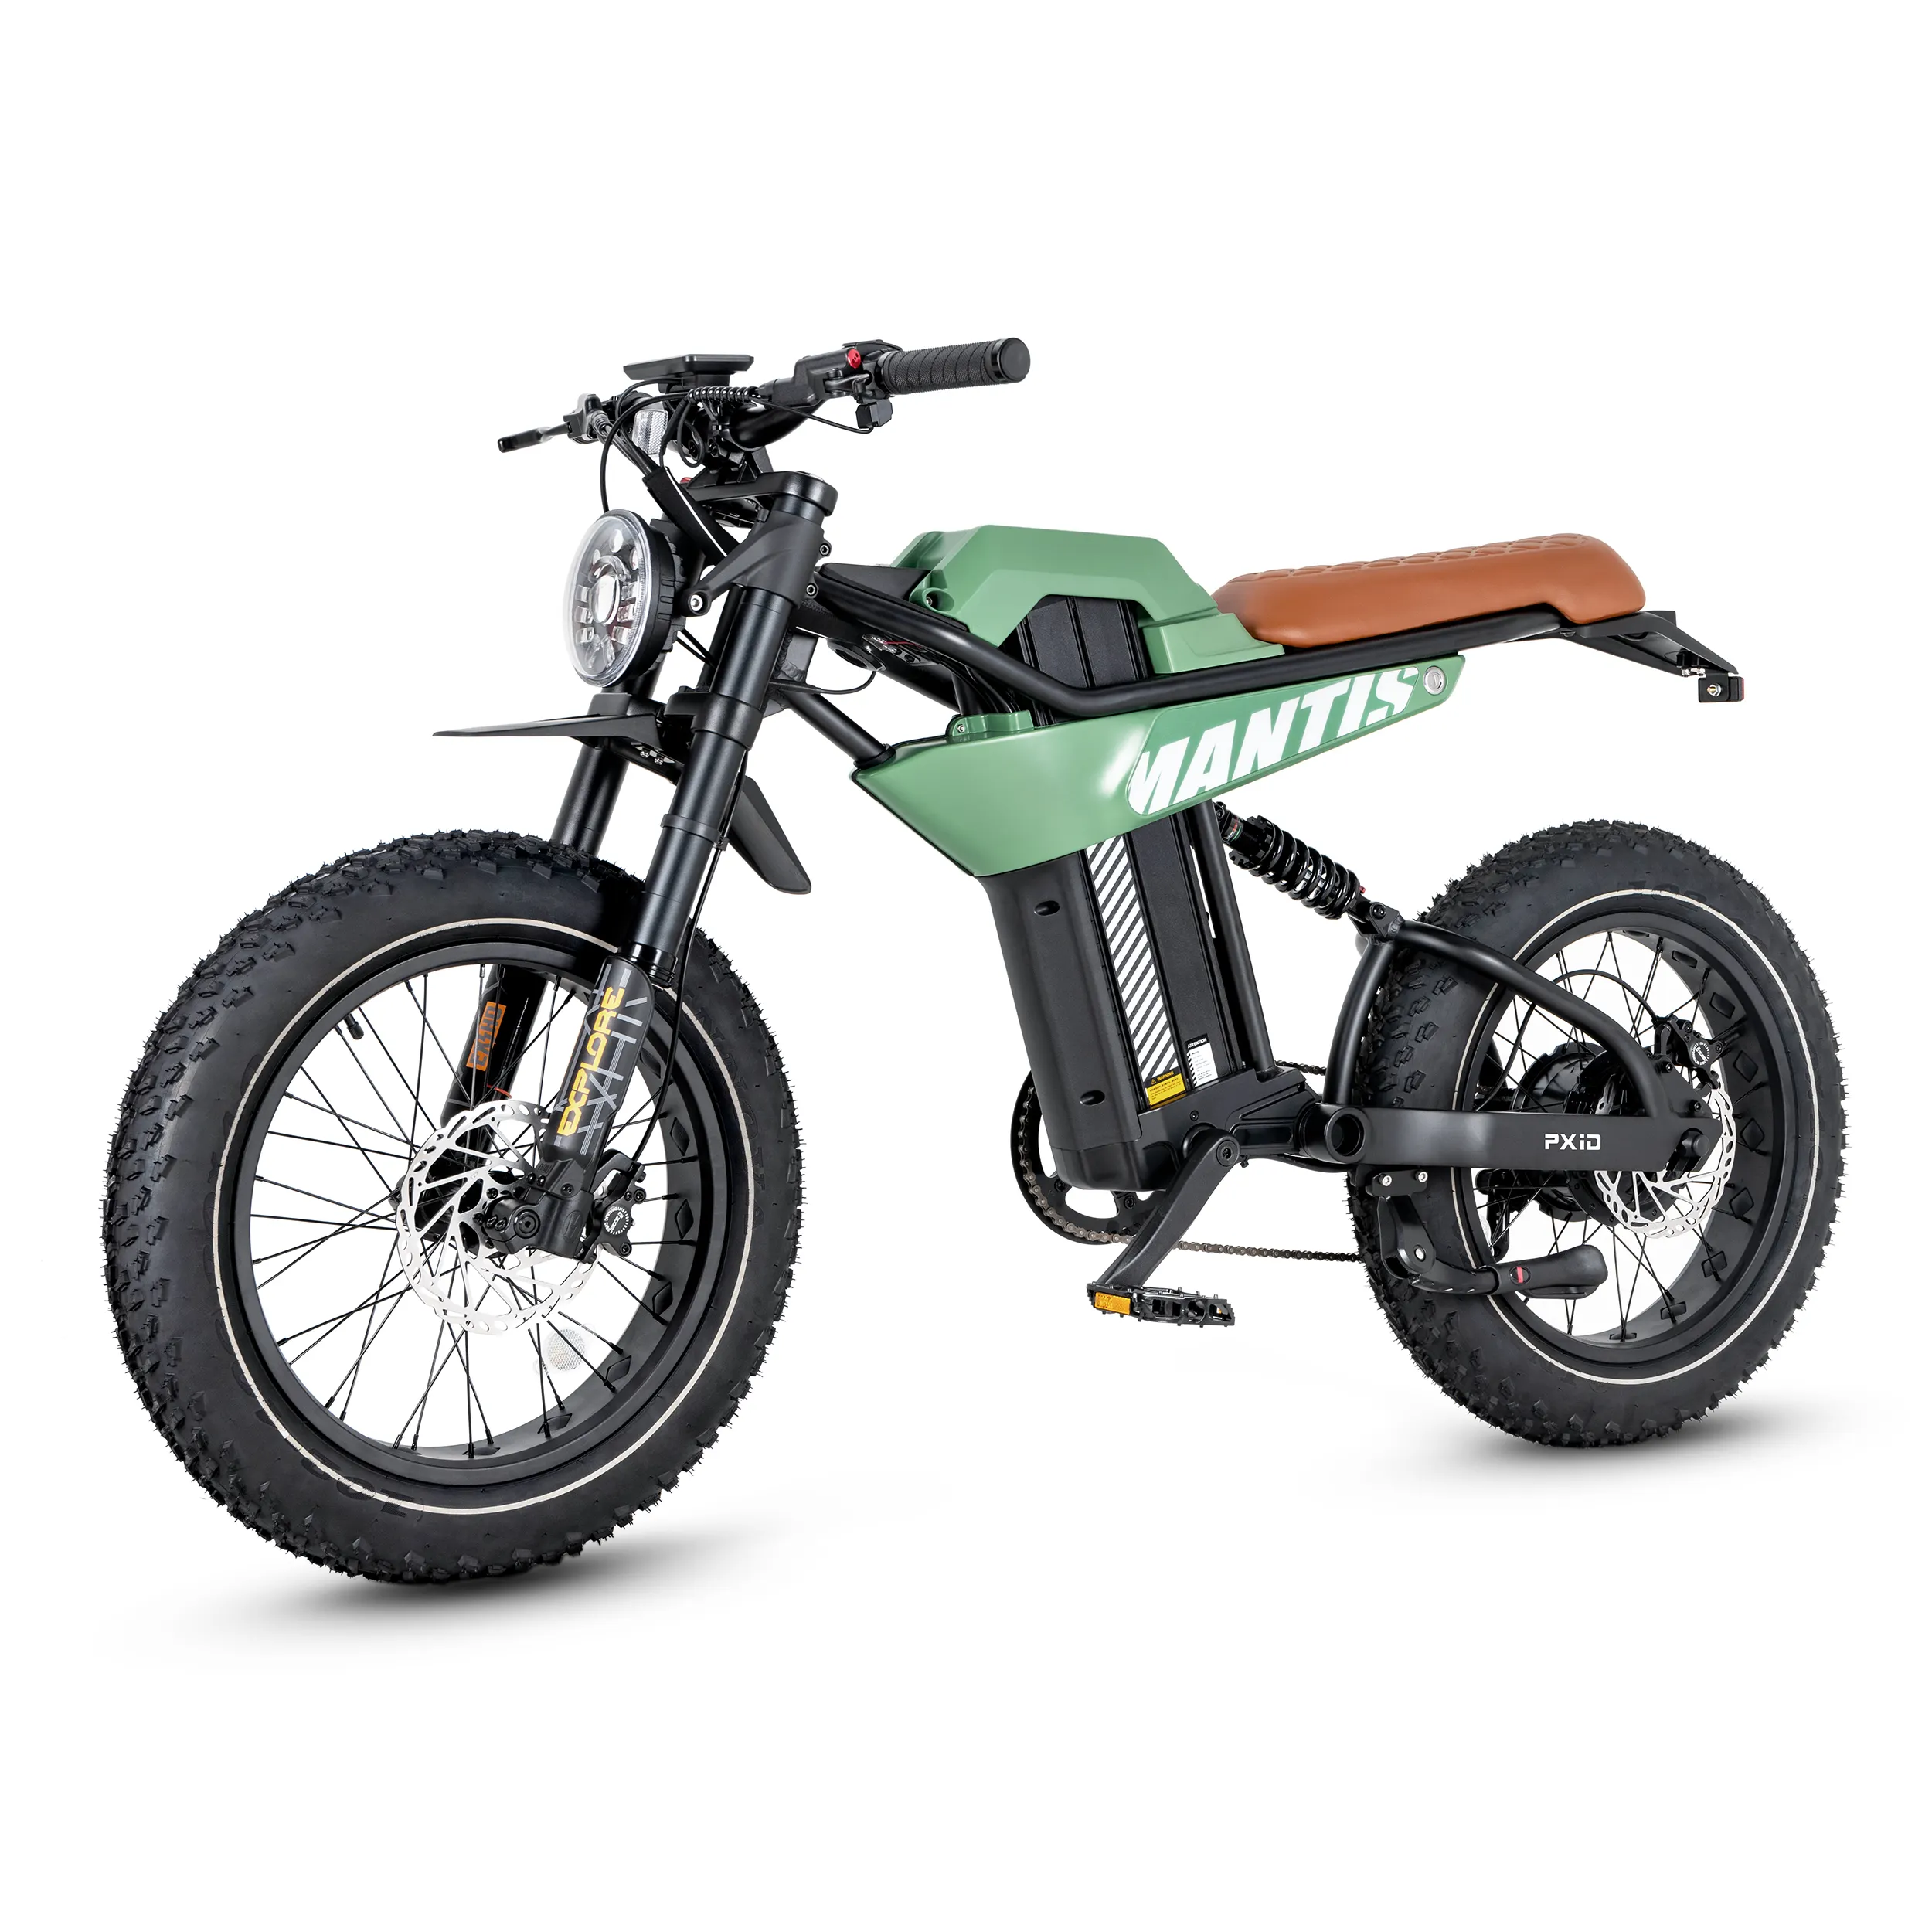 PXID Latest model P6 e bike 750W 48V best emtb 20 inch fatbike full suspension electric hybrid bike